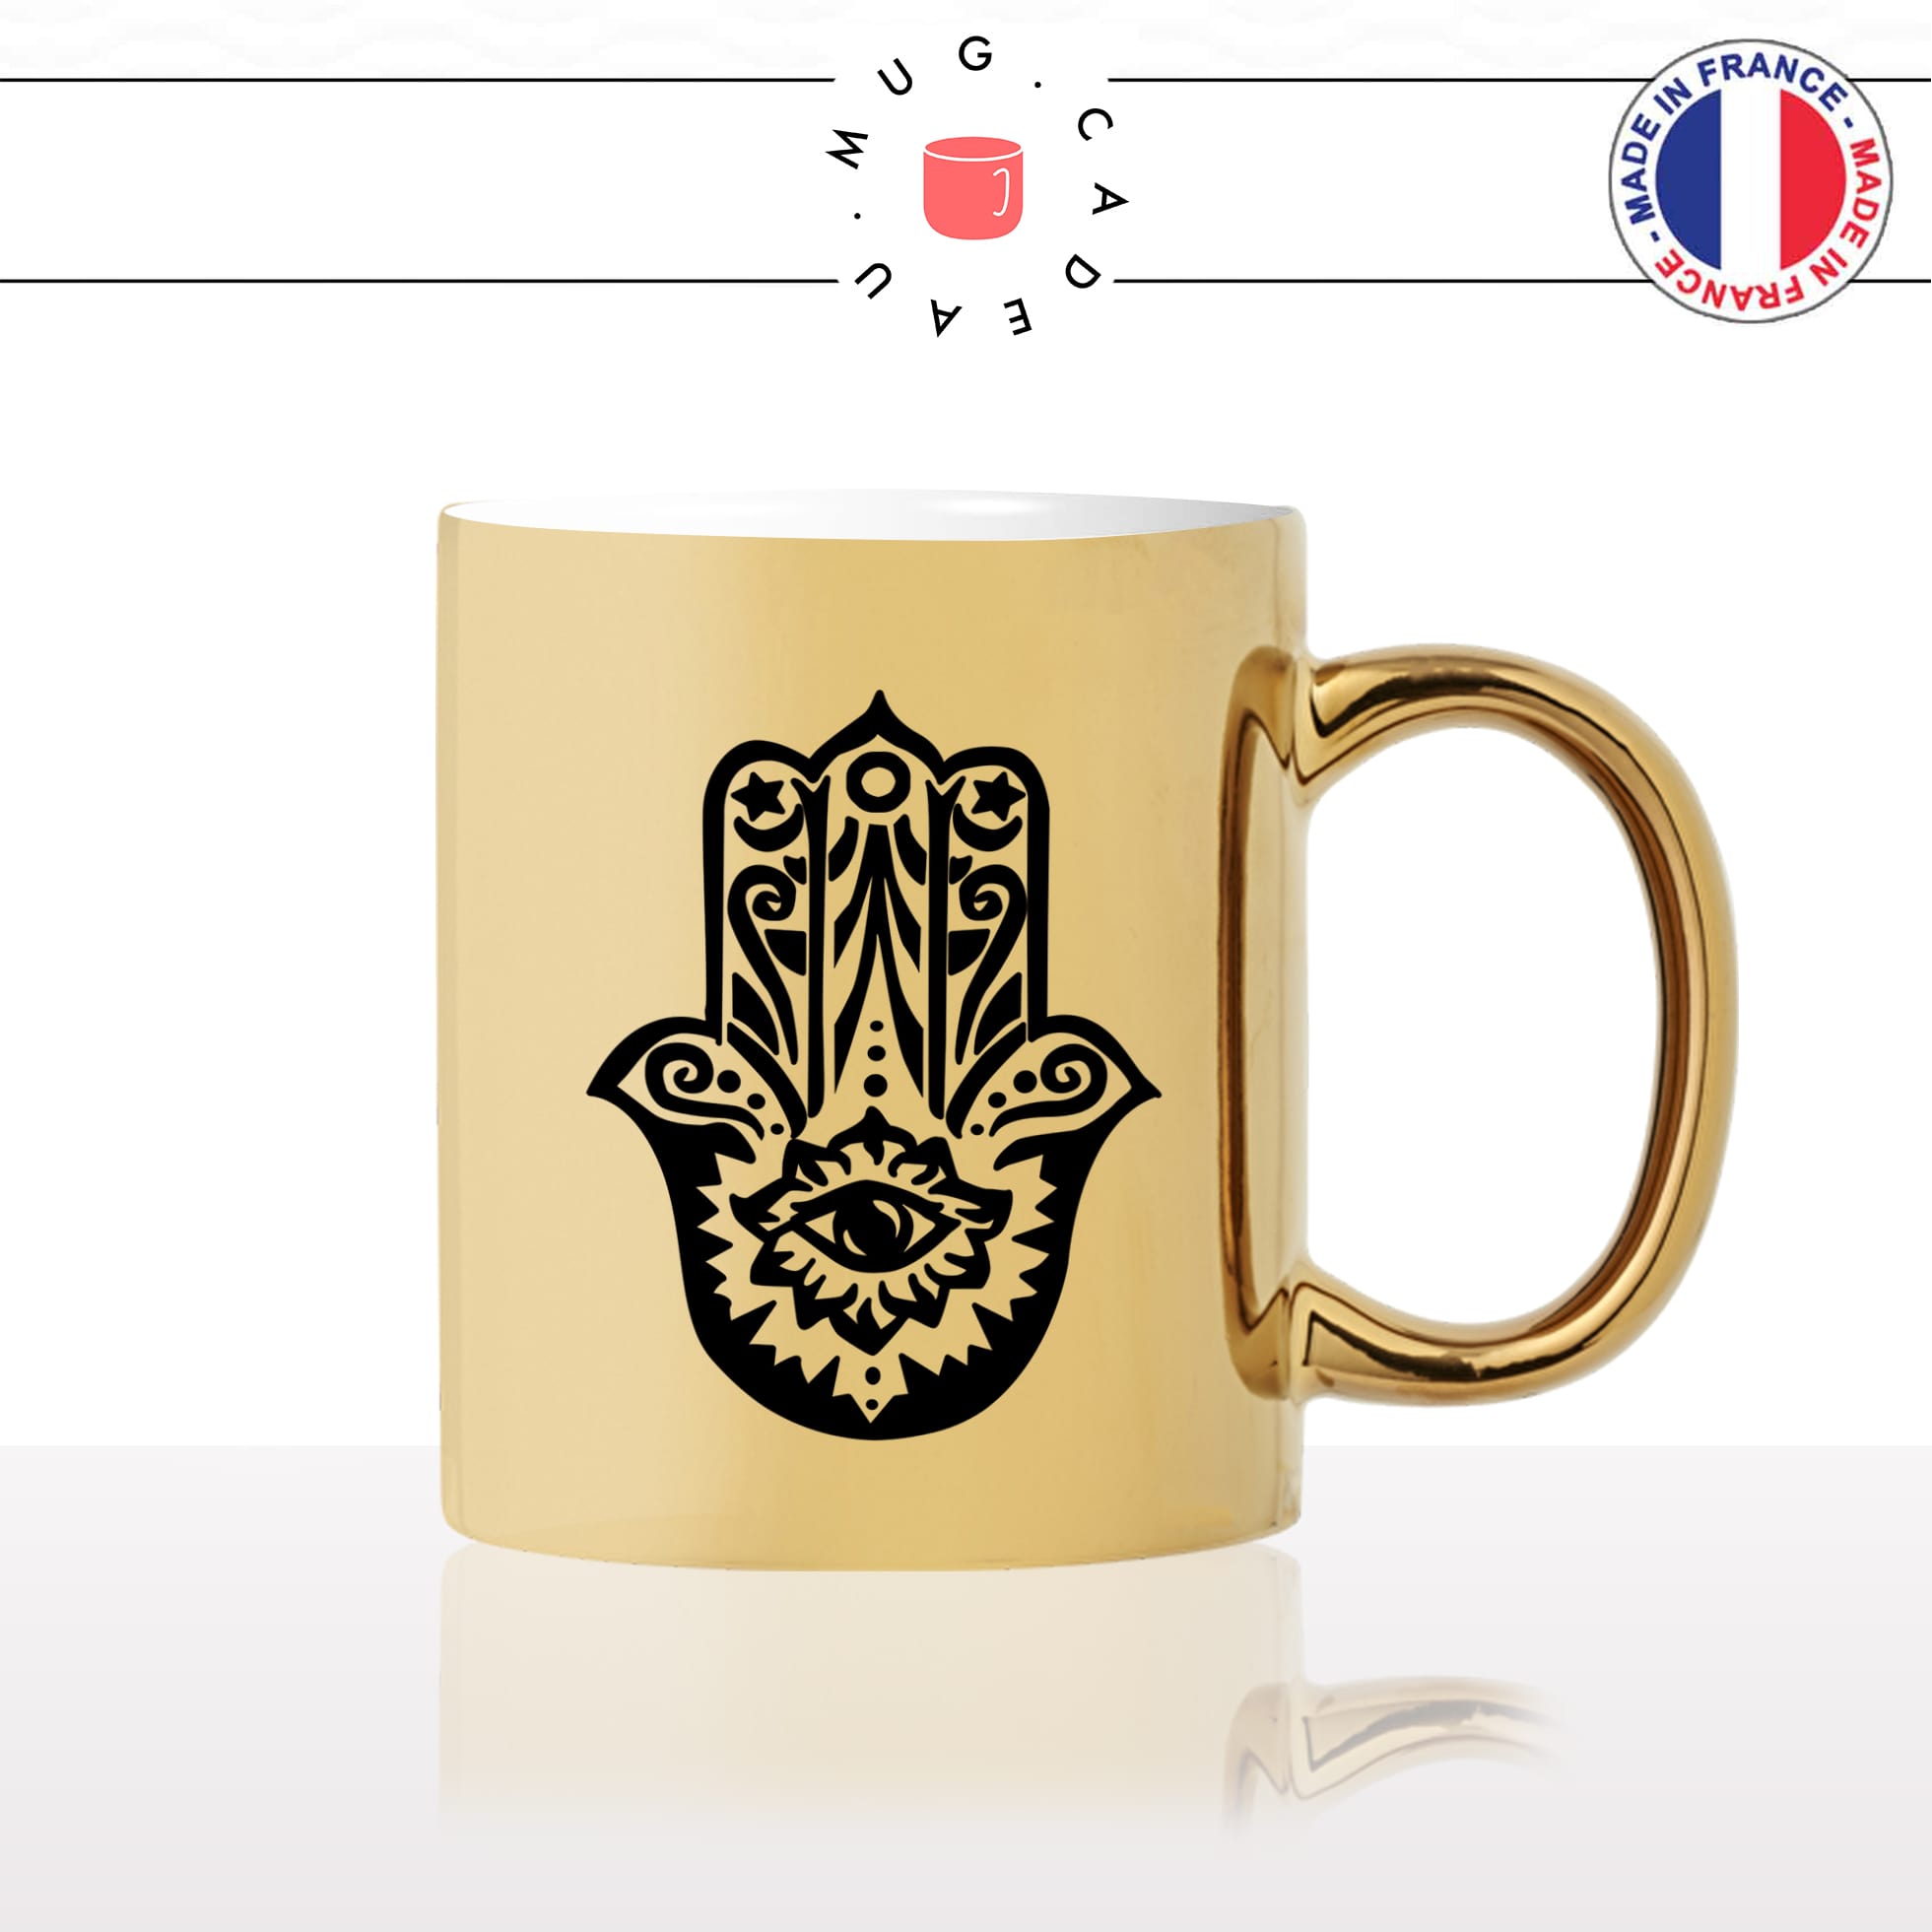 mug-tasse-gold-or-doré-main-de-fatma-fatima-religion-musulmane-histoire-arabe-dessin-original-fun-idée-cadeau-personnalisé-café-thé2-min